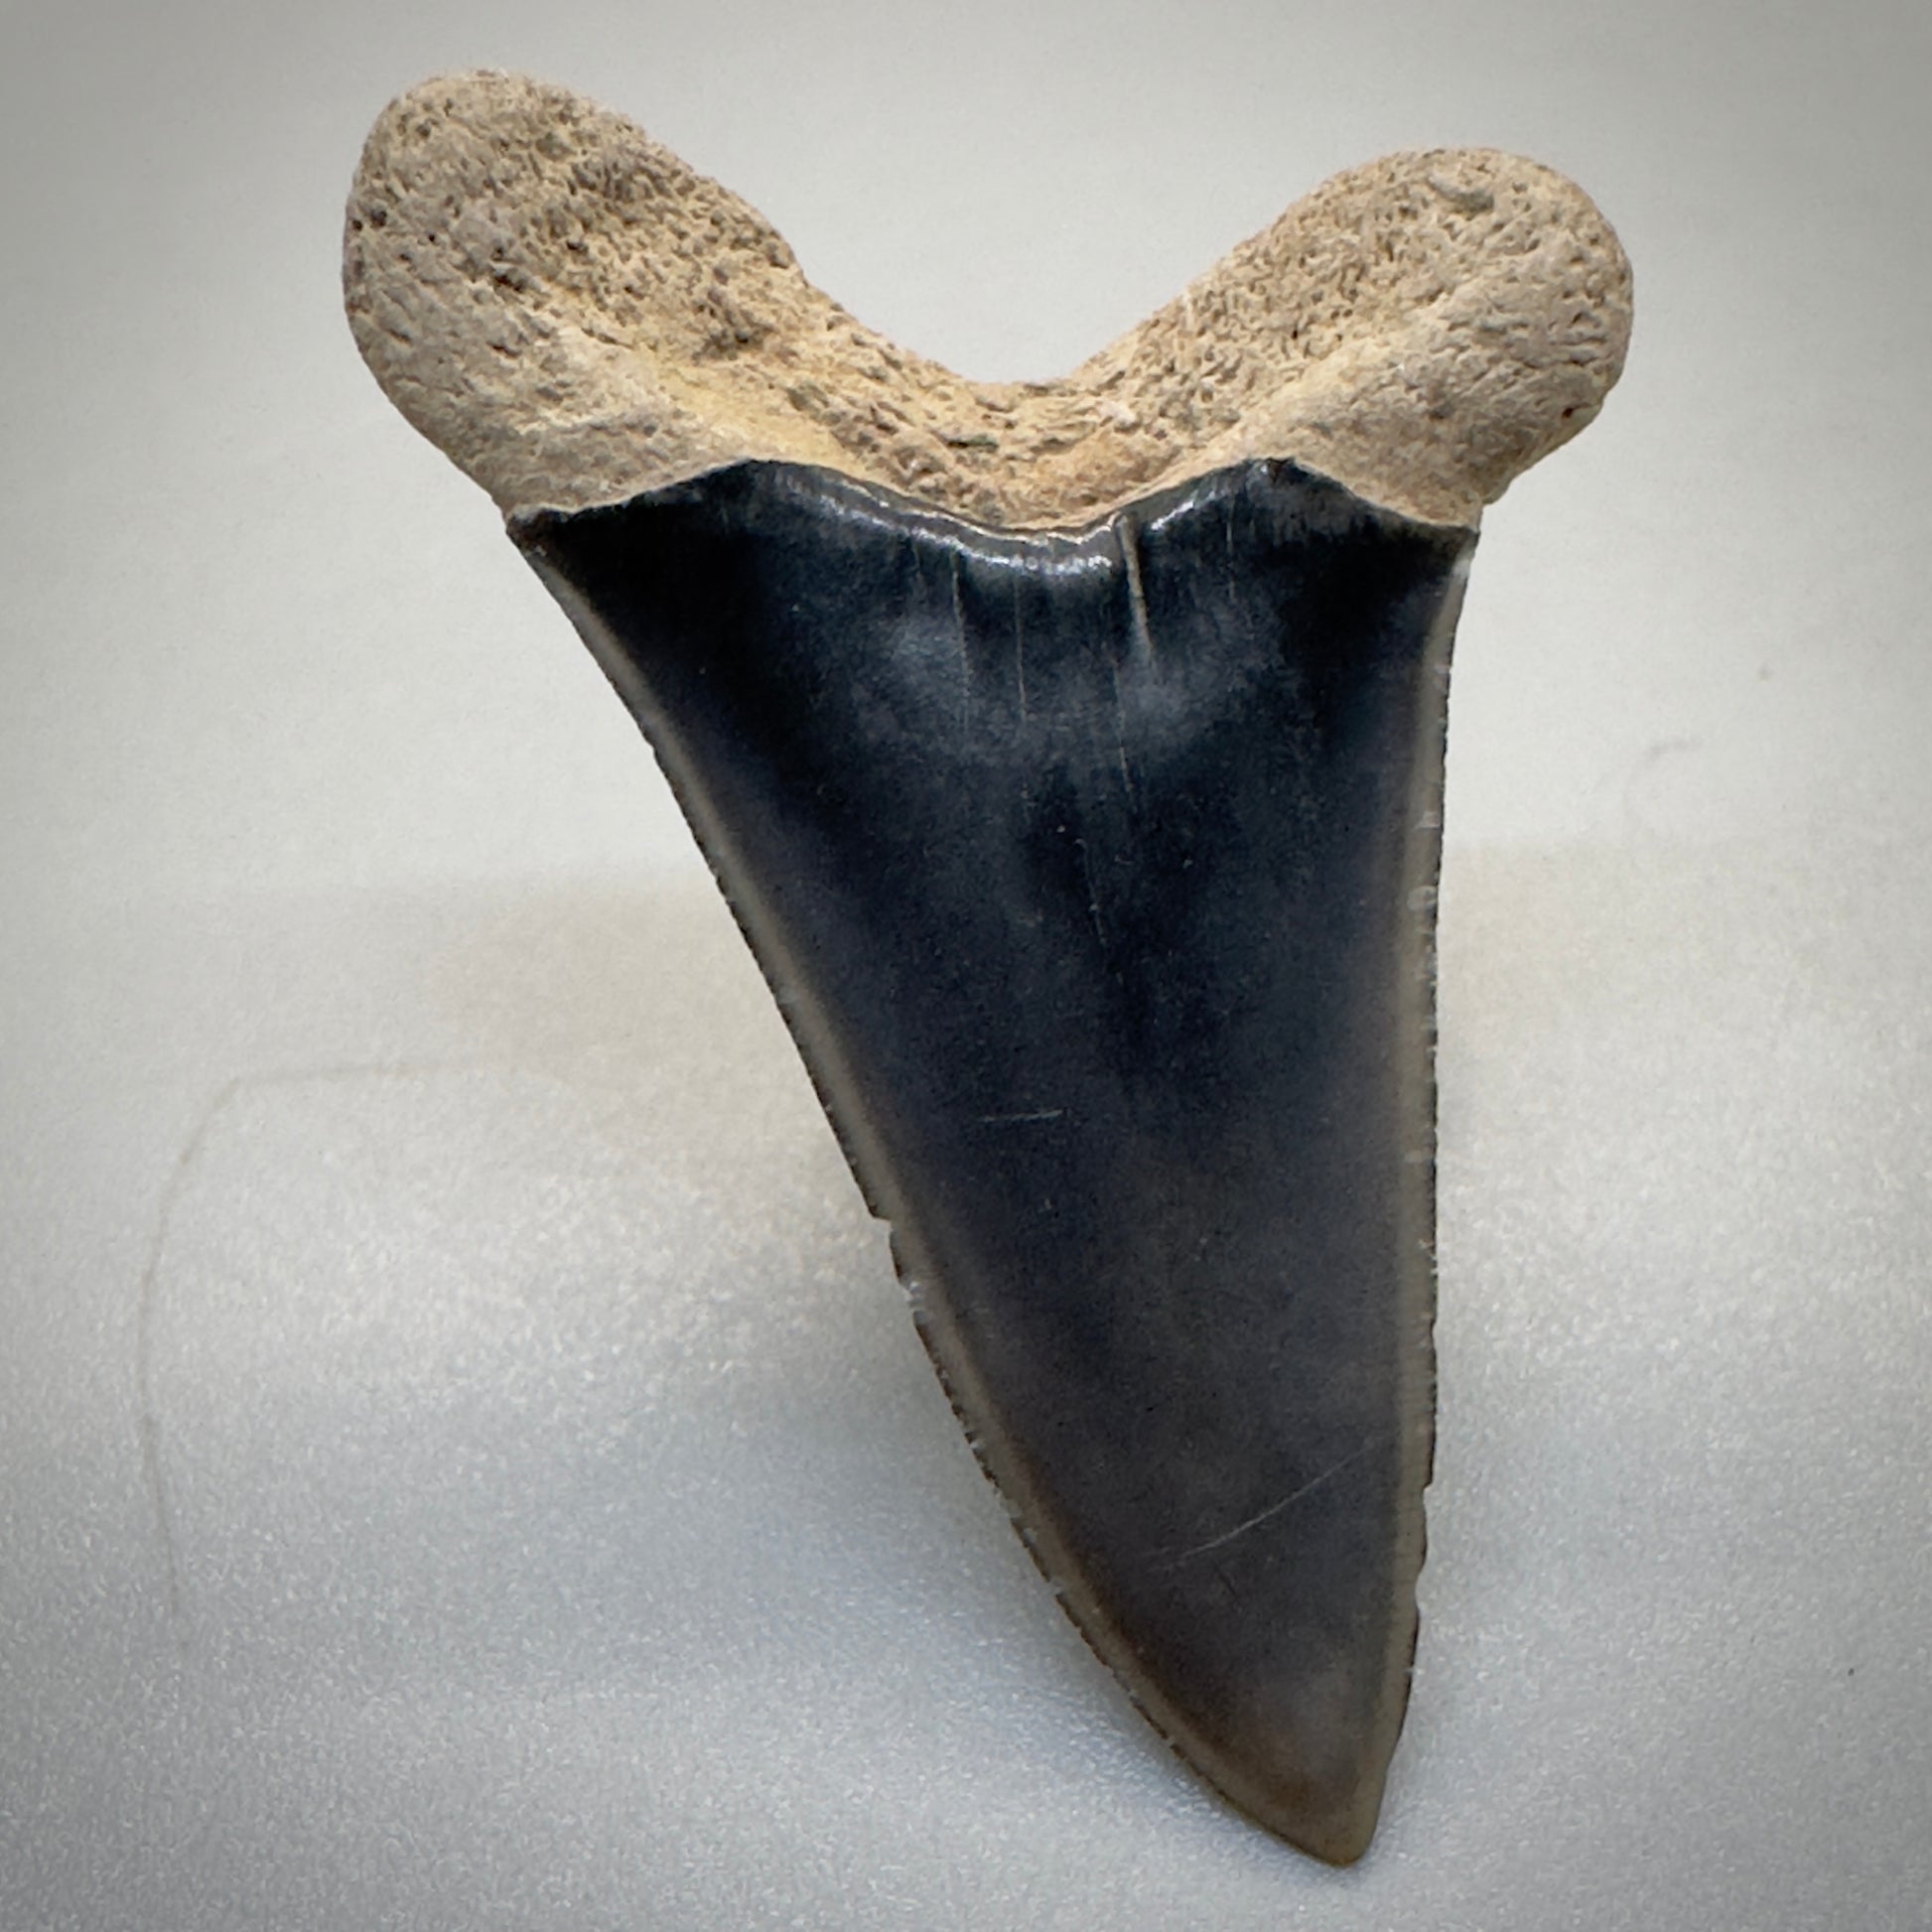 Dark colors 1.54 inches Extinct Longfin Mako - Isurus retroflexus Shark tooth from Southeast, USA M519 back down